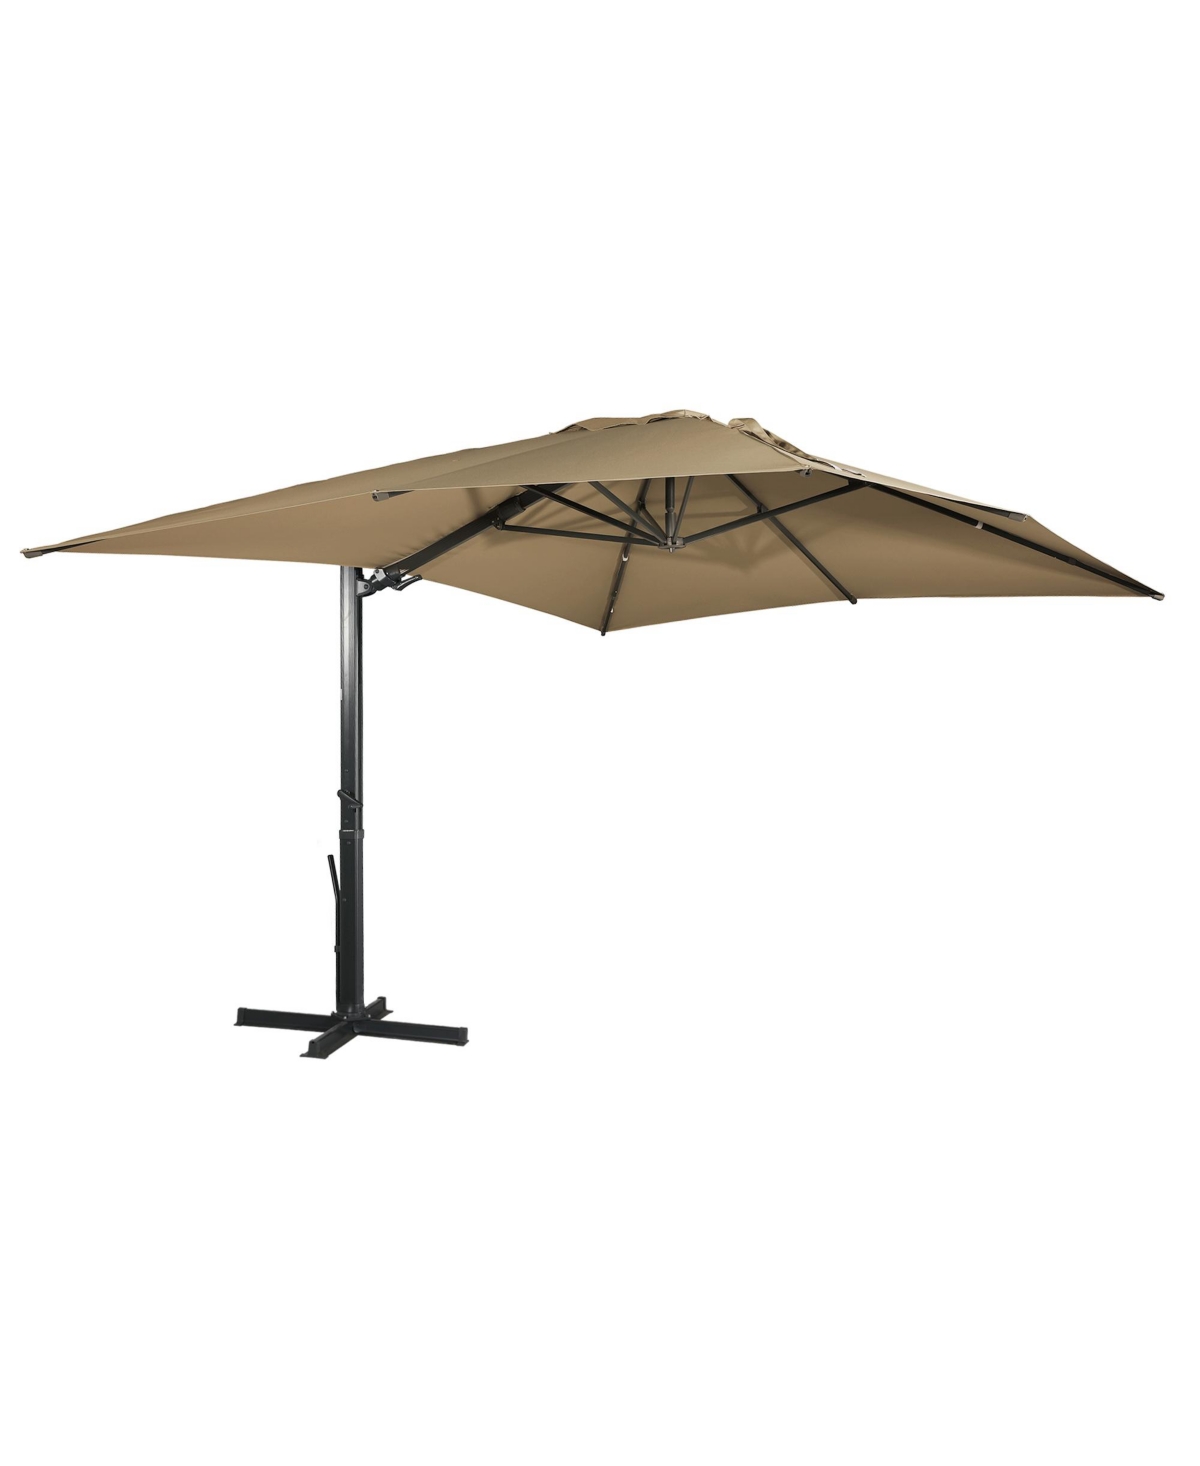 13ft Square Offset Cantilever Patio Umbrella for Outdoor Shade - Gray